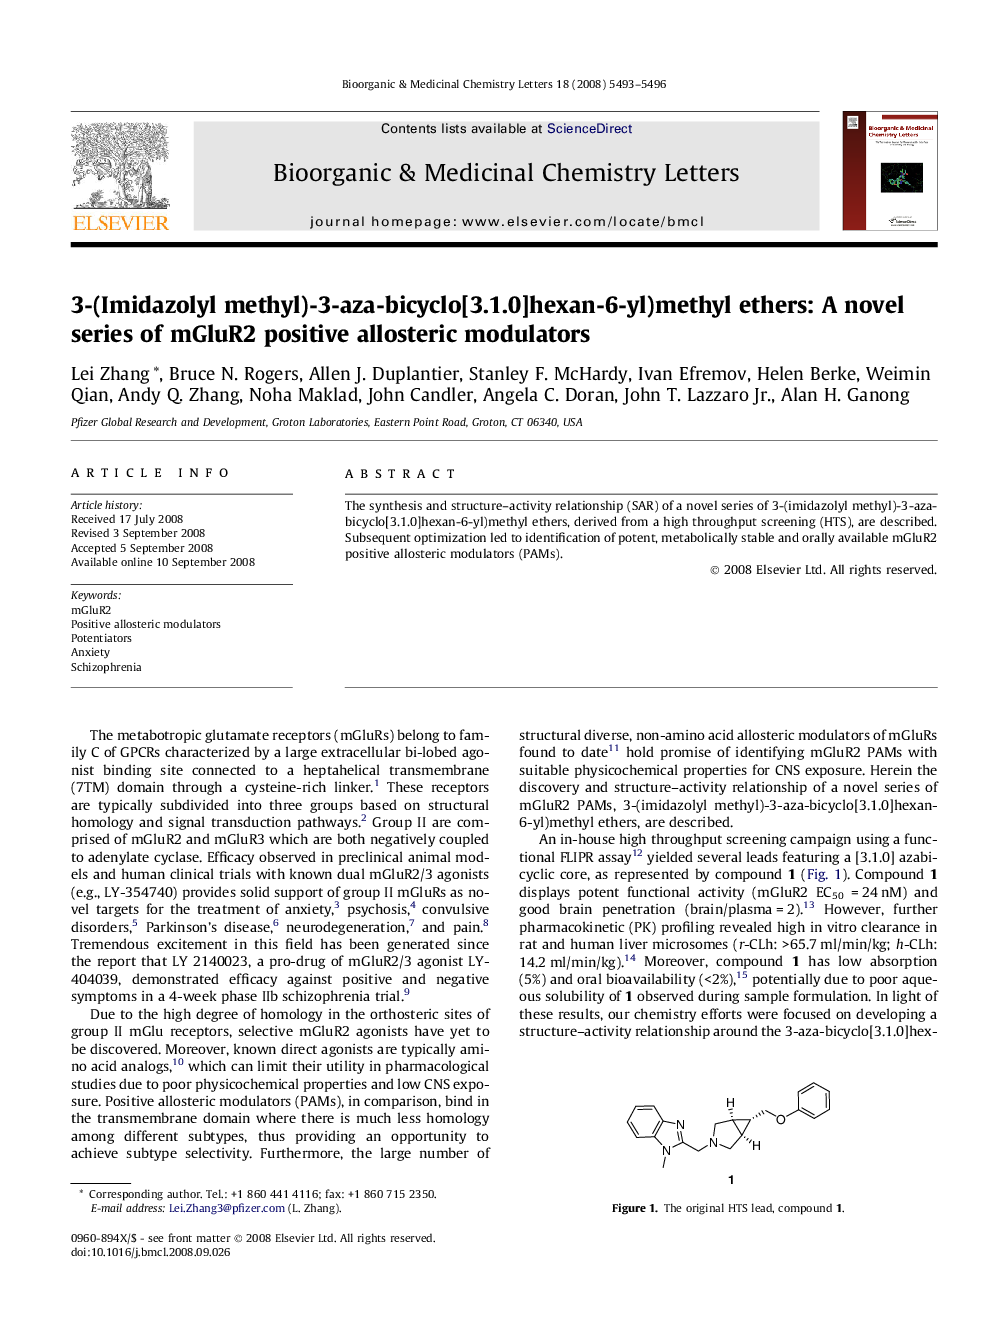 3-(Imidazolyl methyl)-3-aza-bicyclo[3.1.0]hexan-6-yl)methyl ethers: A novel series of mGluR2 positive allosteric modulators